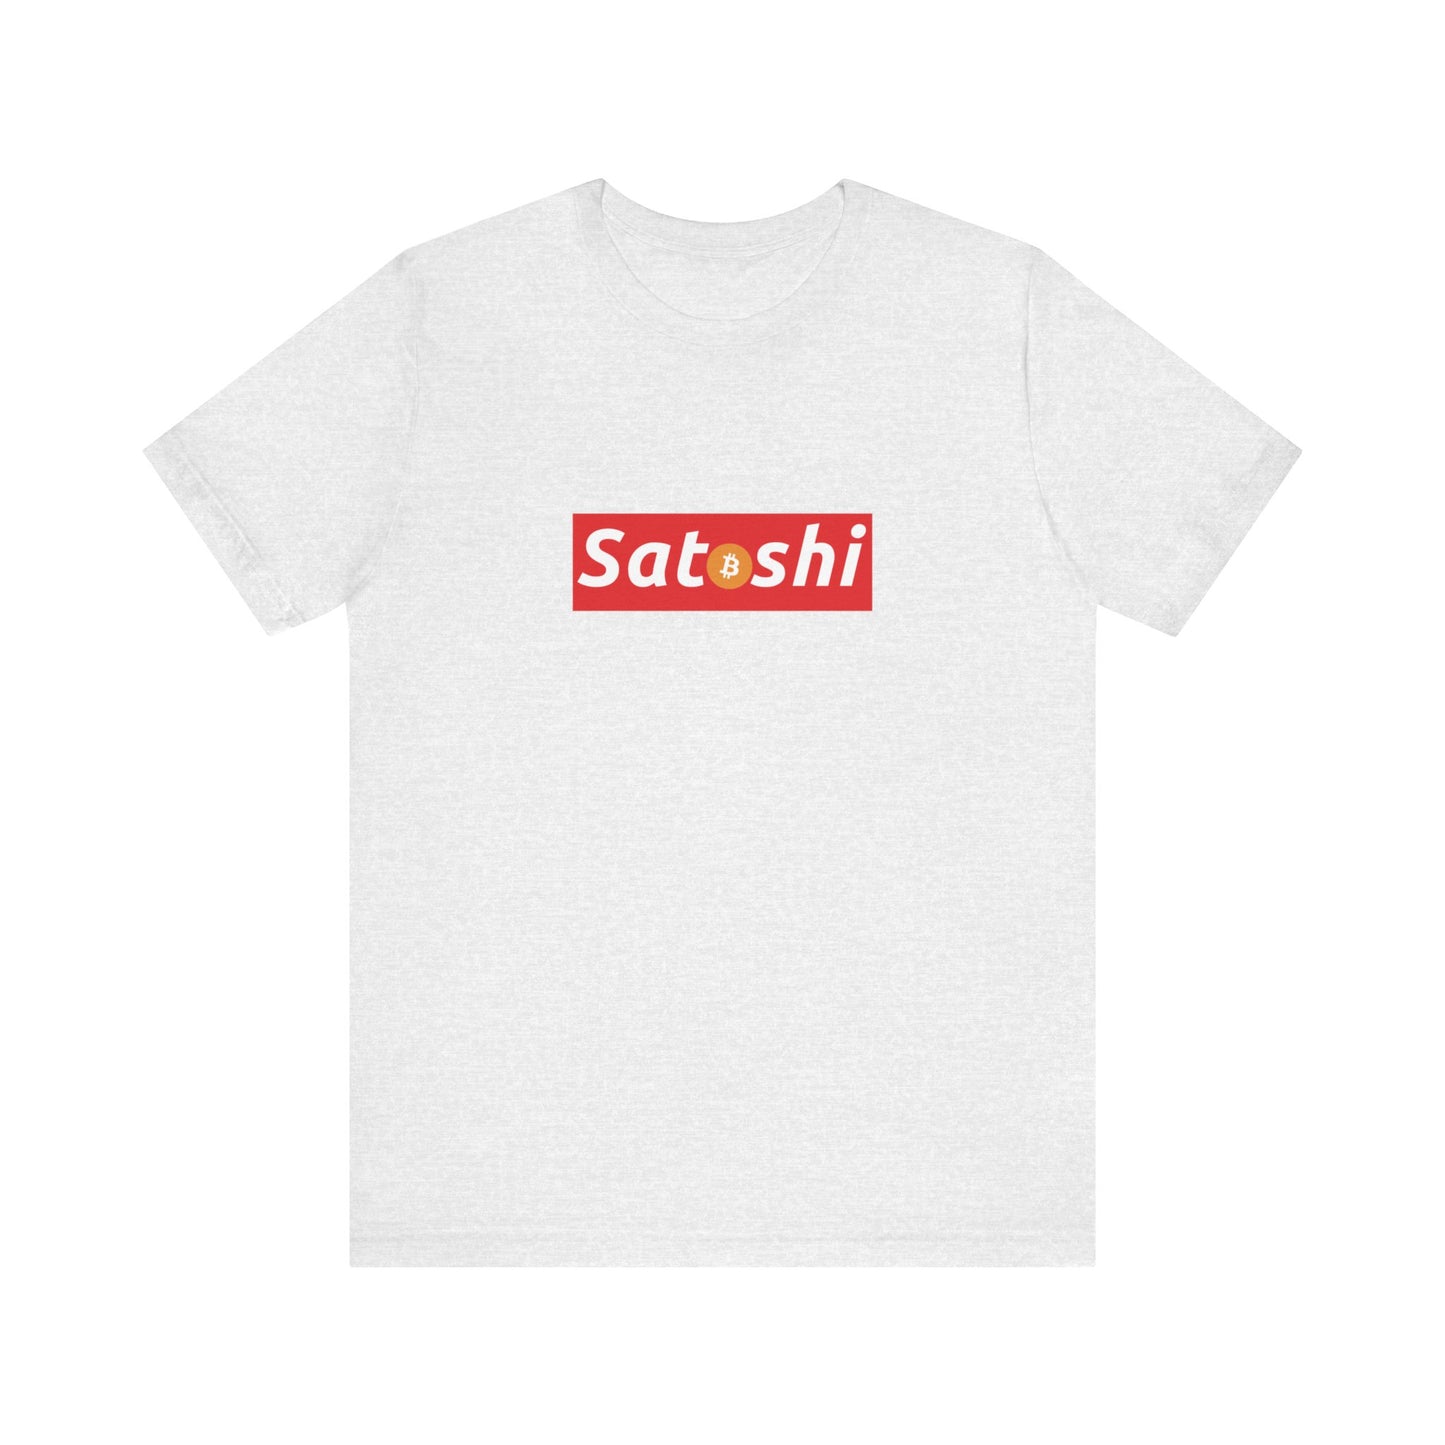 Satoshi is Supreme - Unisex T-Shirt